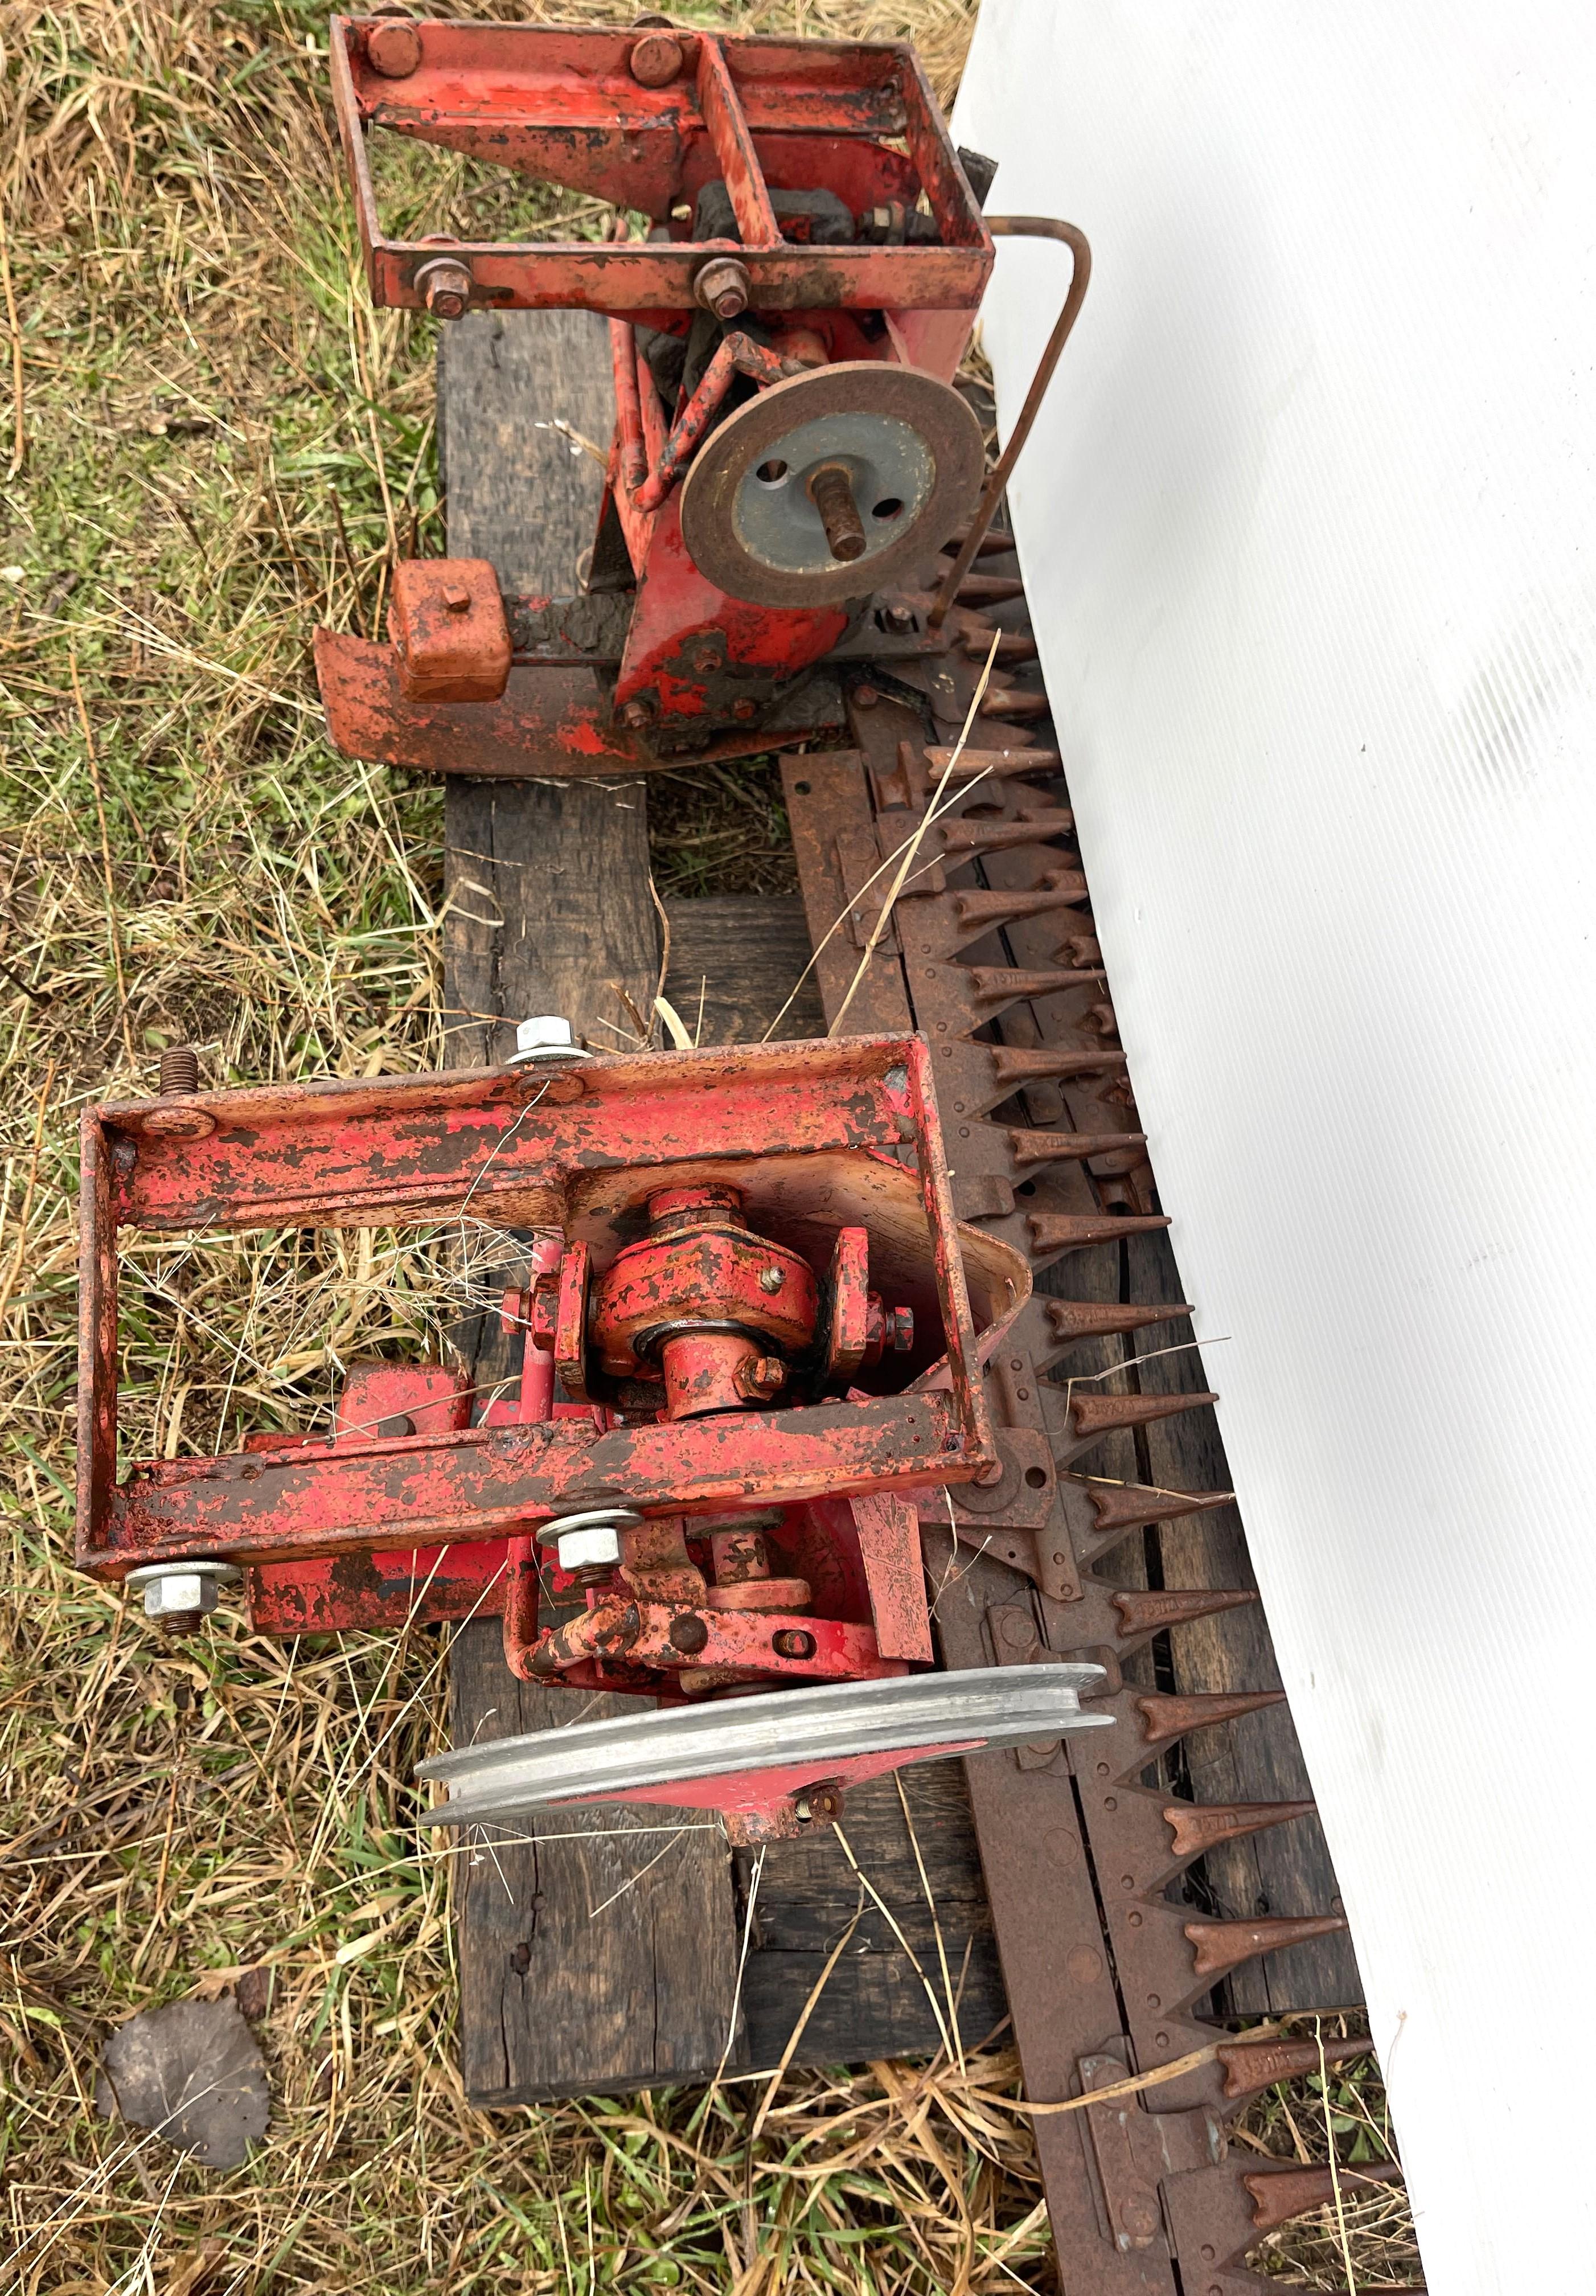 David Bradley Tractors with attachments